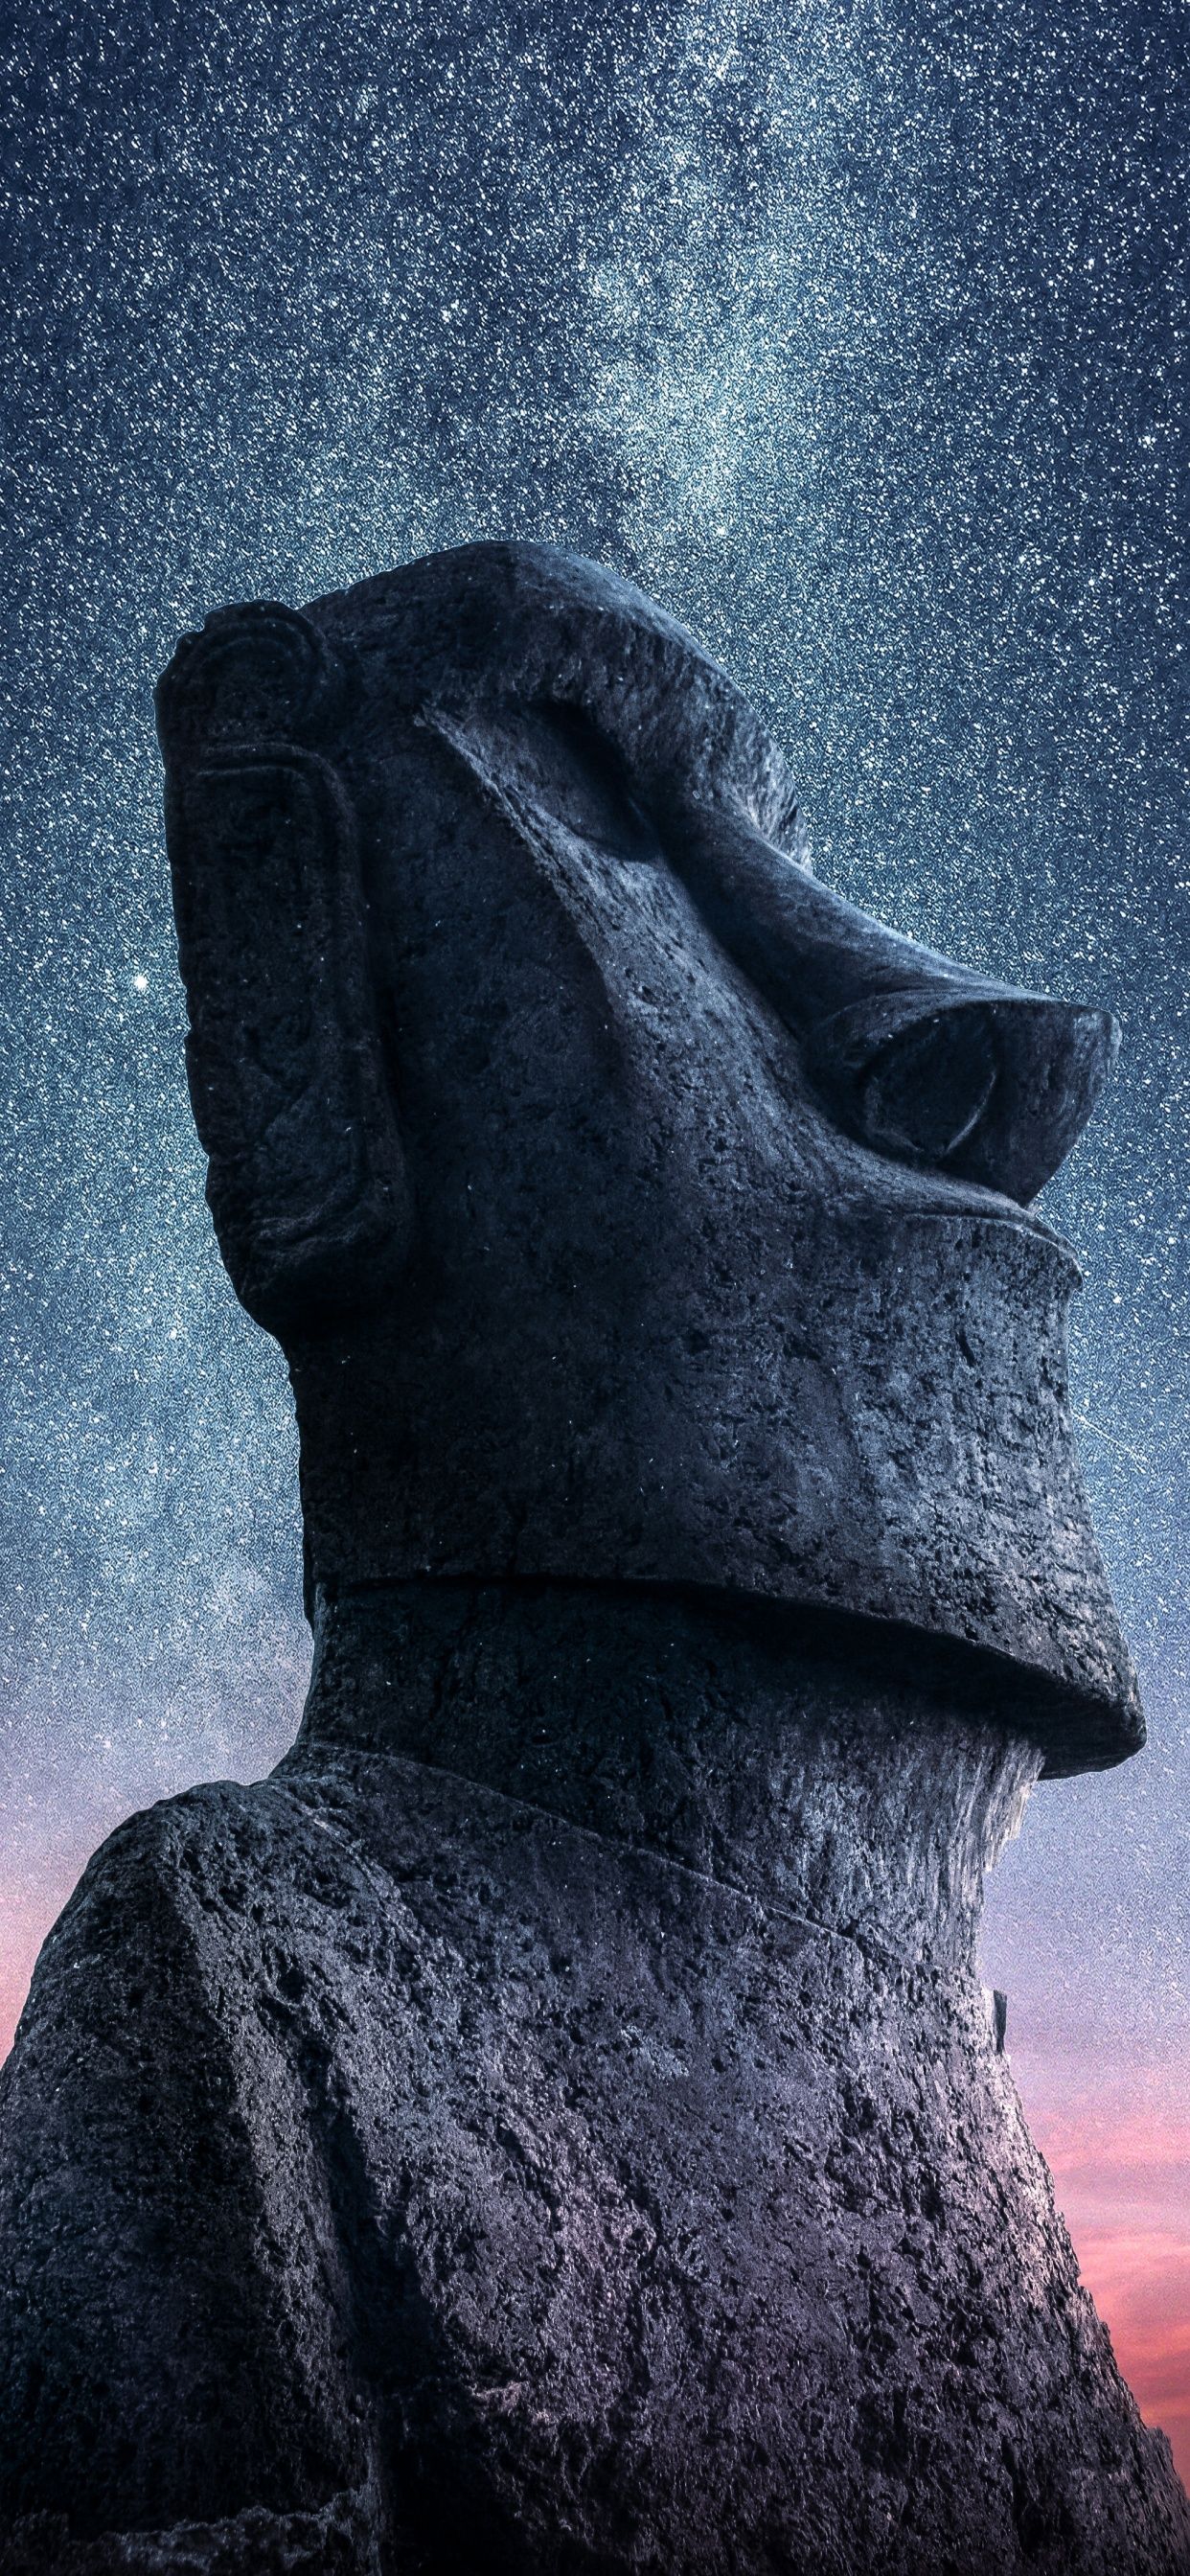 IPhone wallpaper of a moai statue under a starry sky - Statue